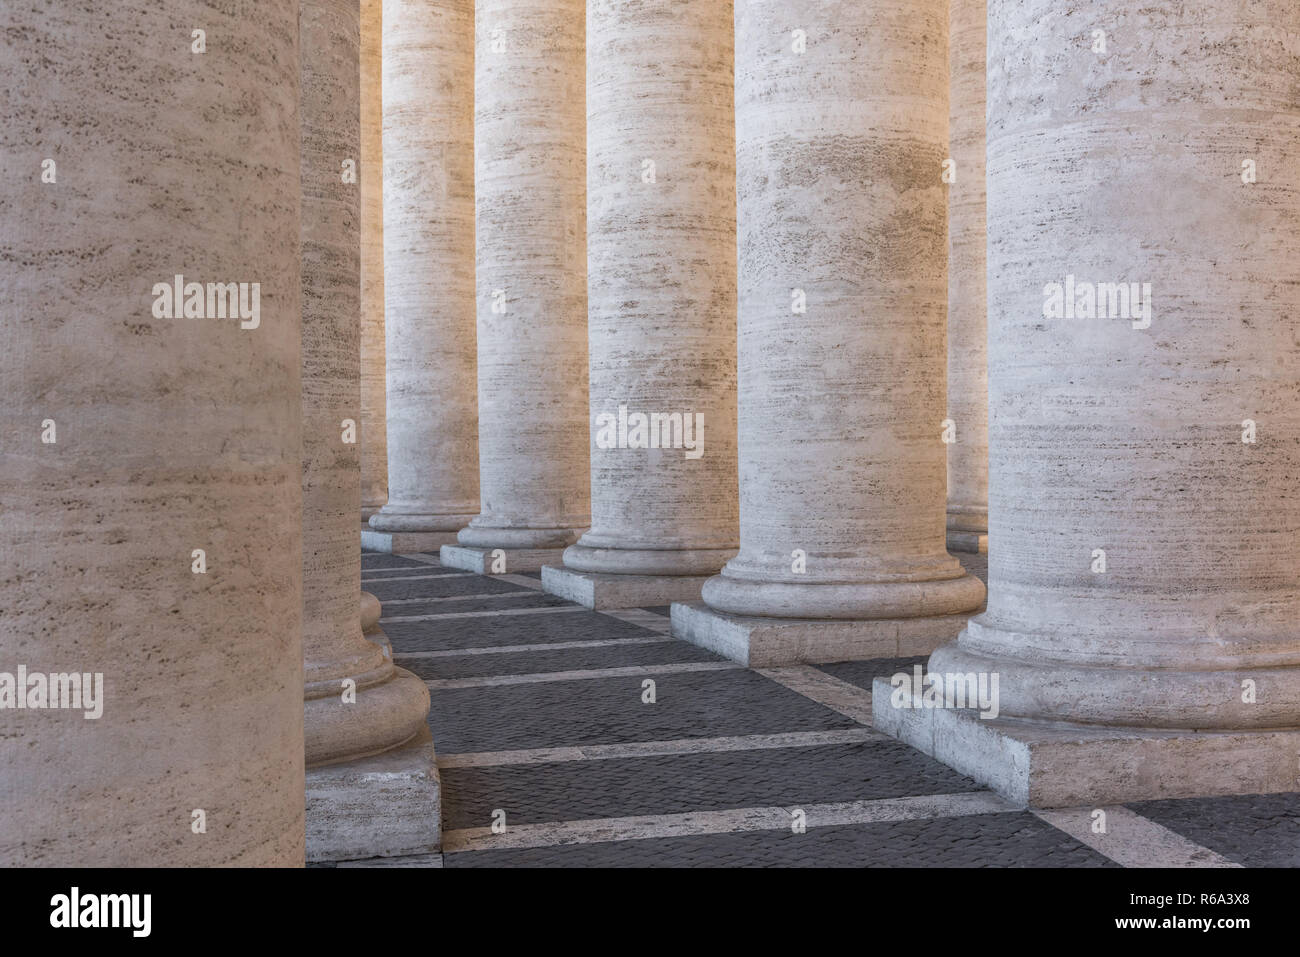 Bernini's St. Peter's Square Colonnade, Vatican City, Rome, Italy Stock Photo